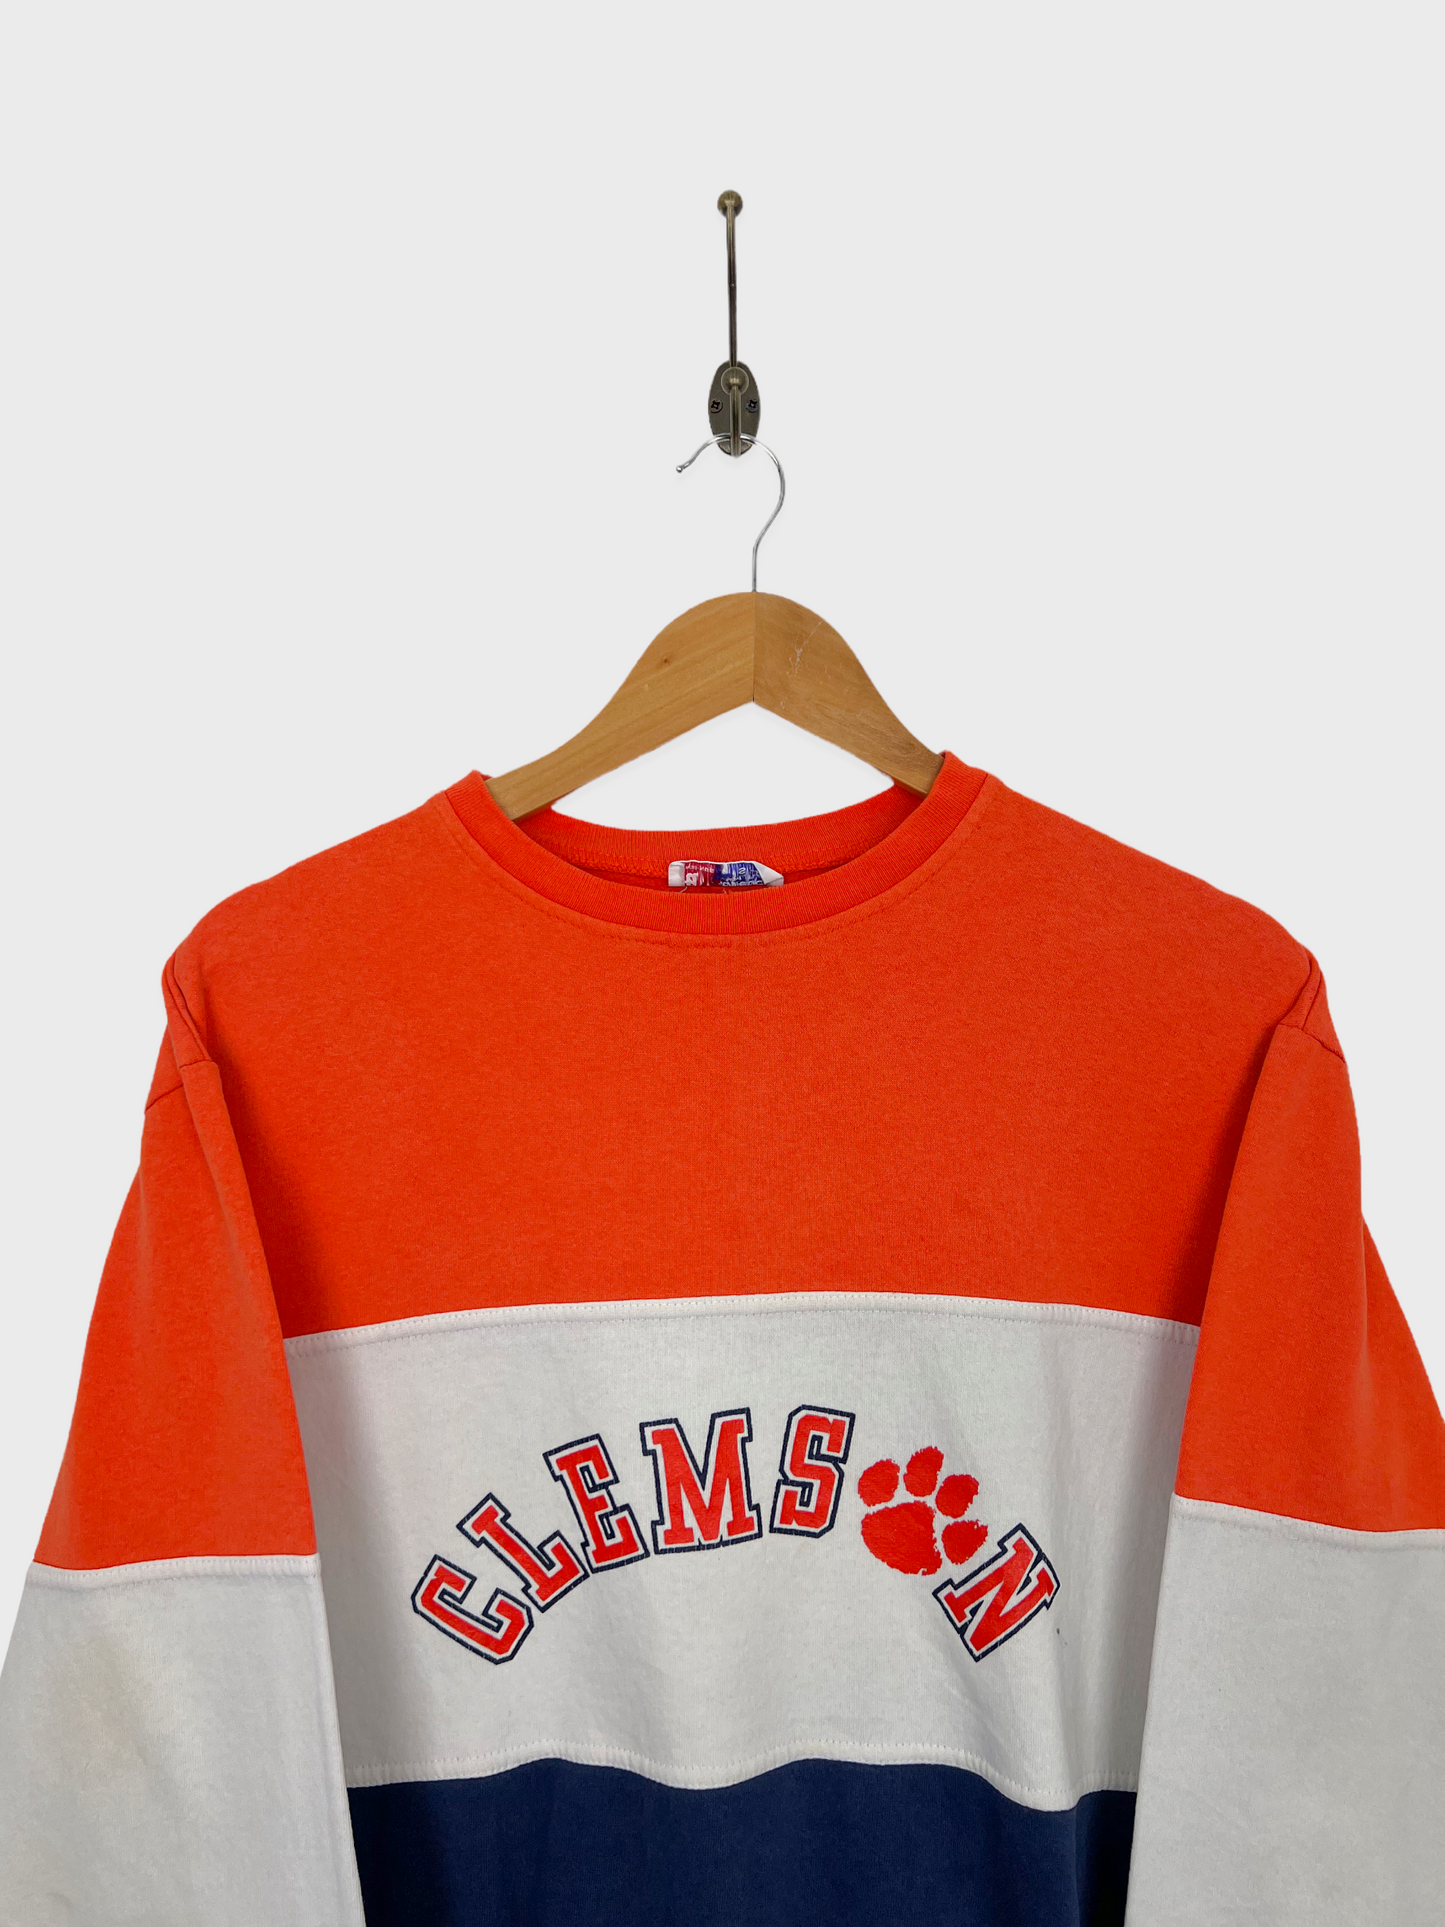 90's Clemson Tigers USA Made Light Vintage Sweatshirt Size 8